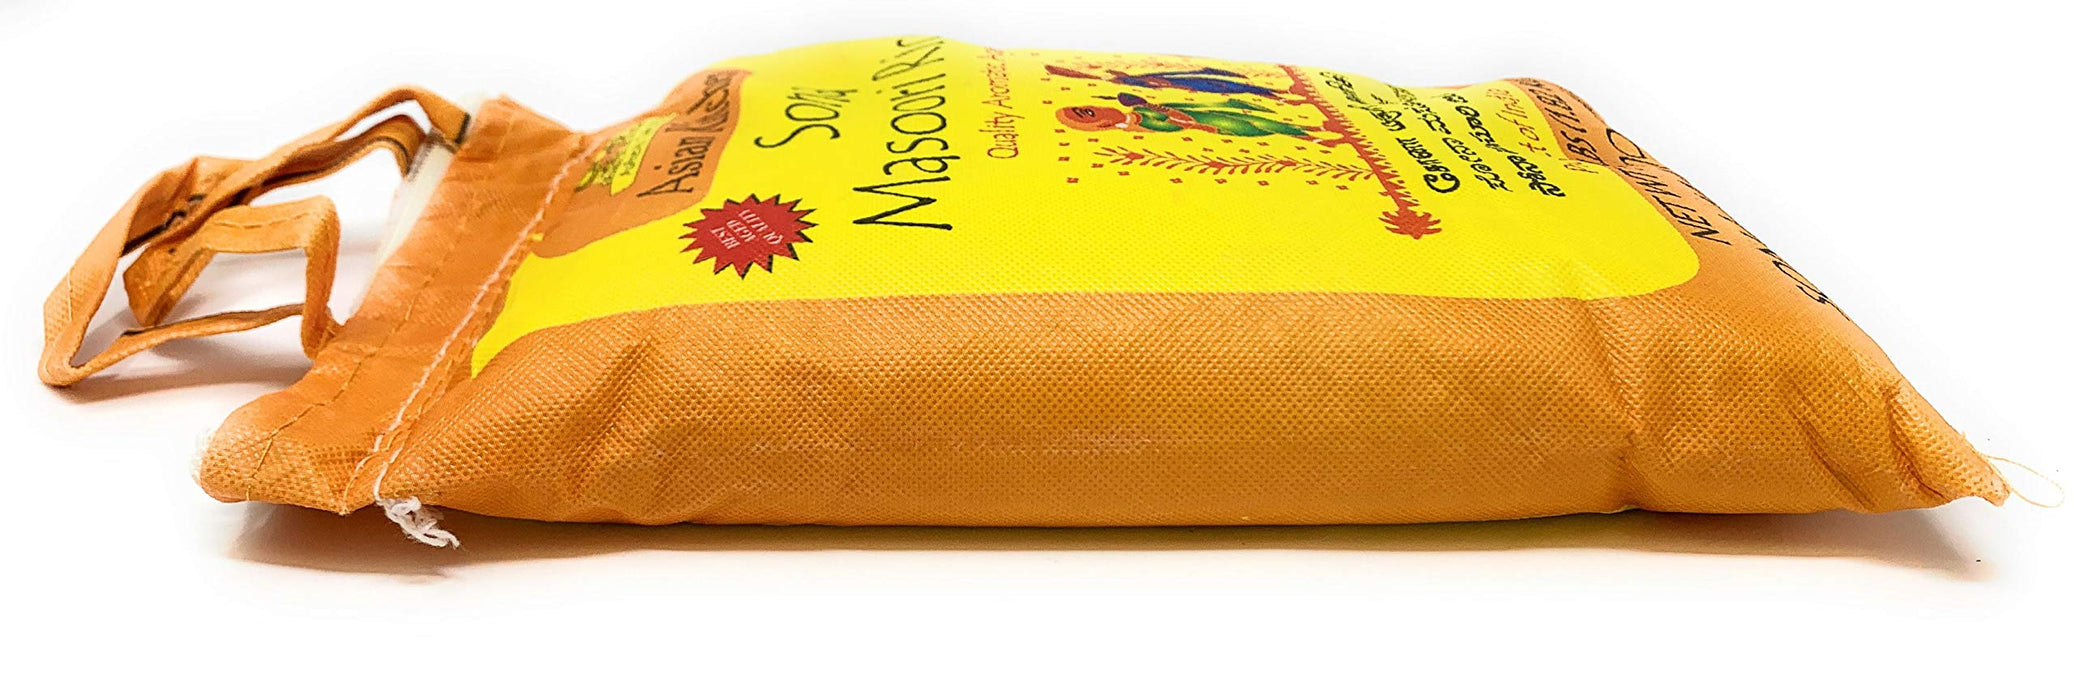 Asian Kitchen White Sona Masoori Aged Rice 4lbs (1.81kg) Short Grain Rice ~ All Natural | Gluten Friendly | Vegan | Indian Origin | Export Quality